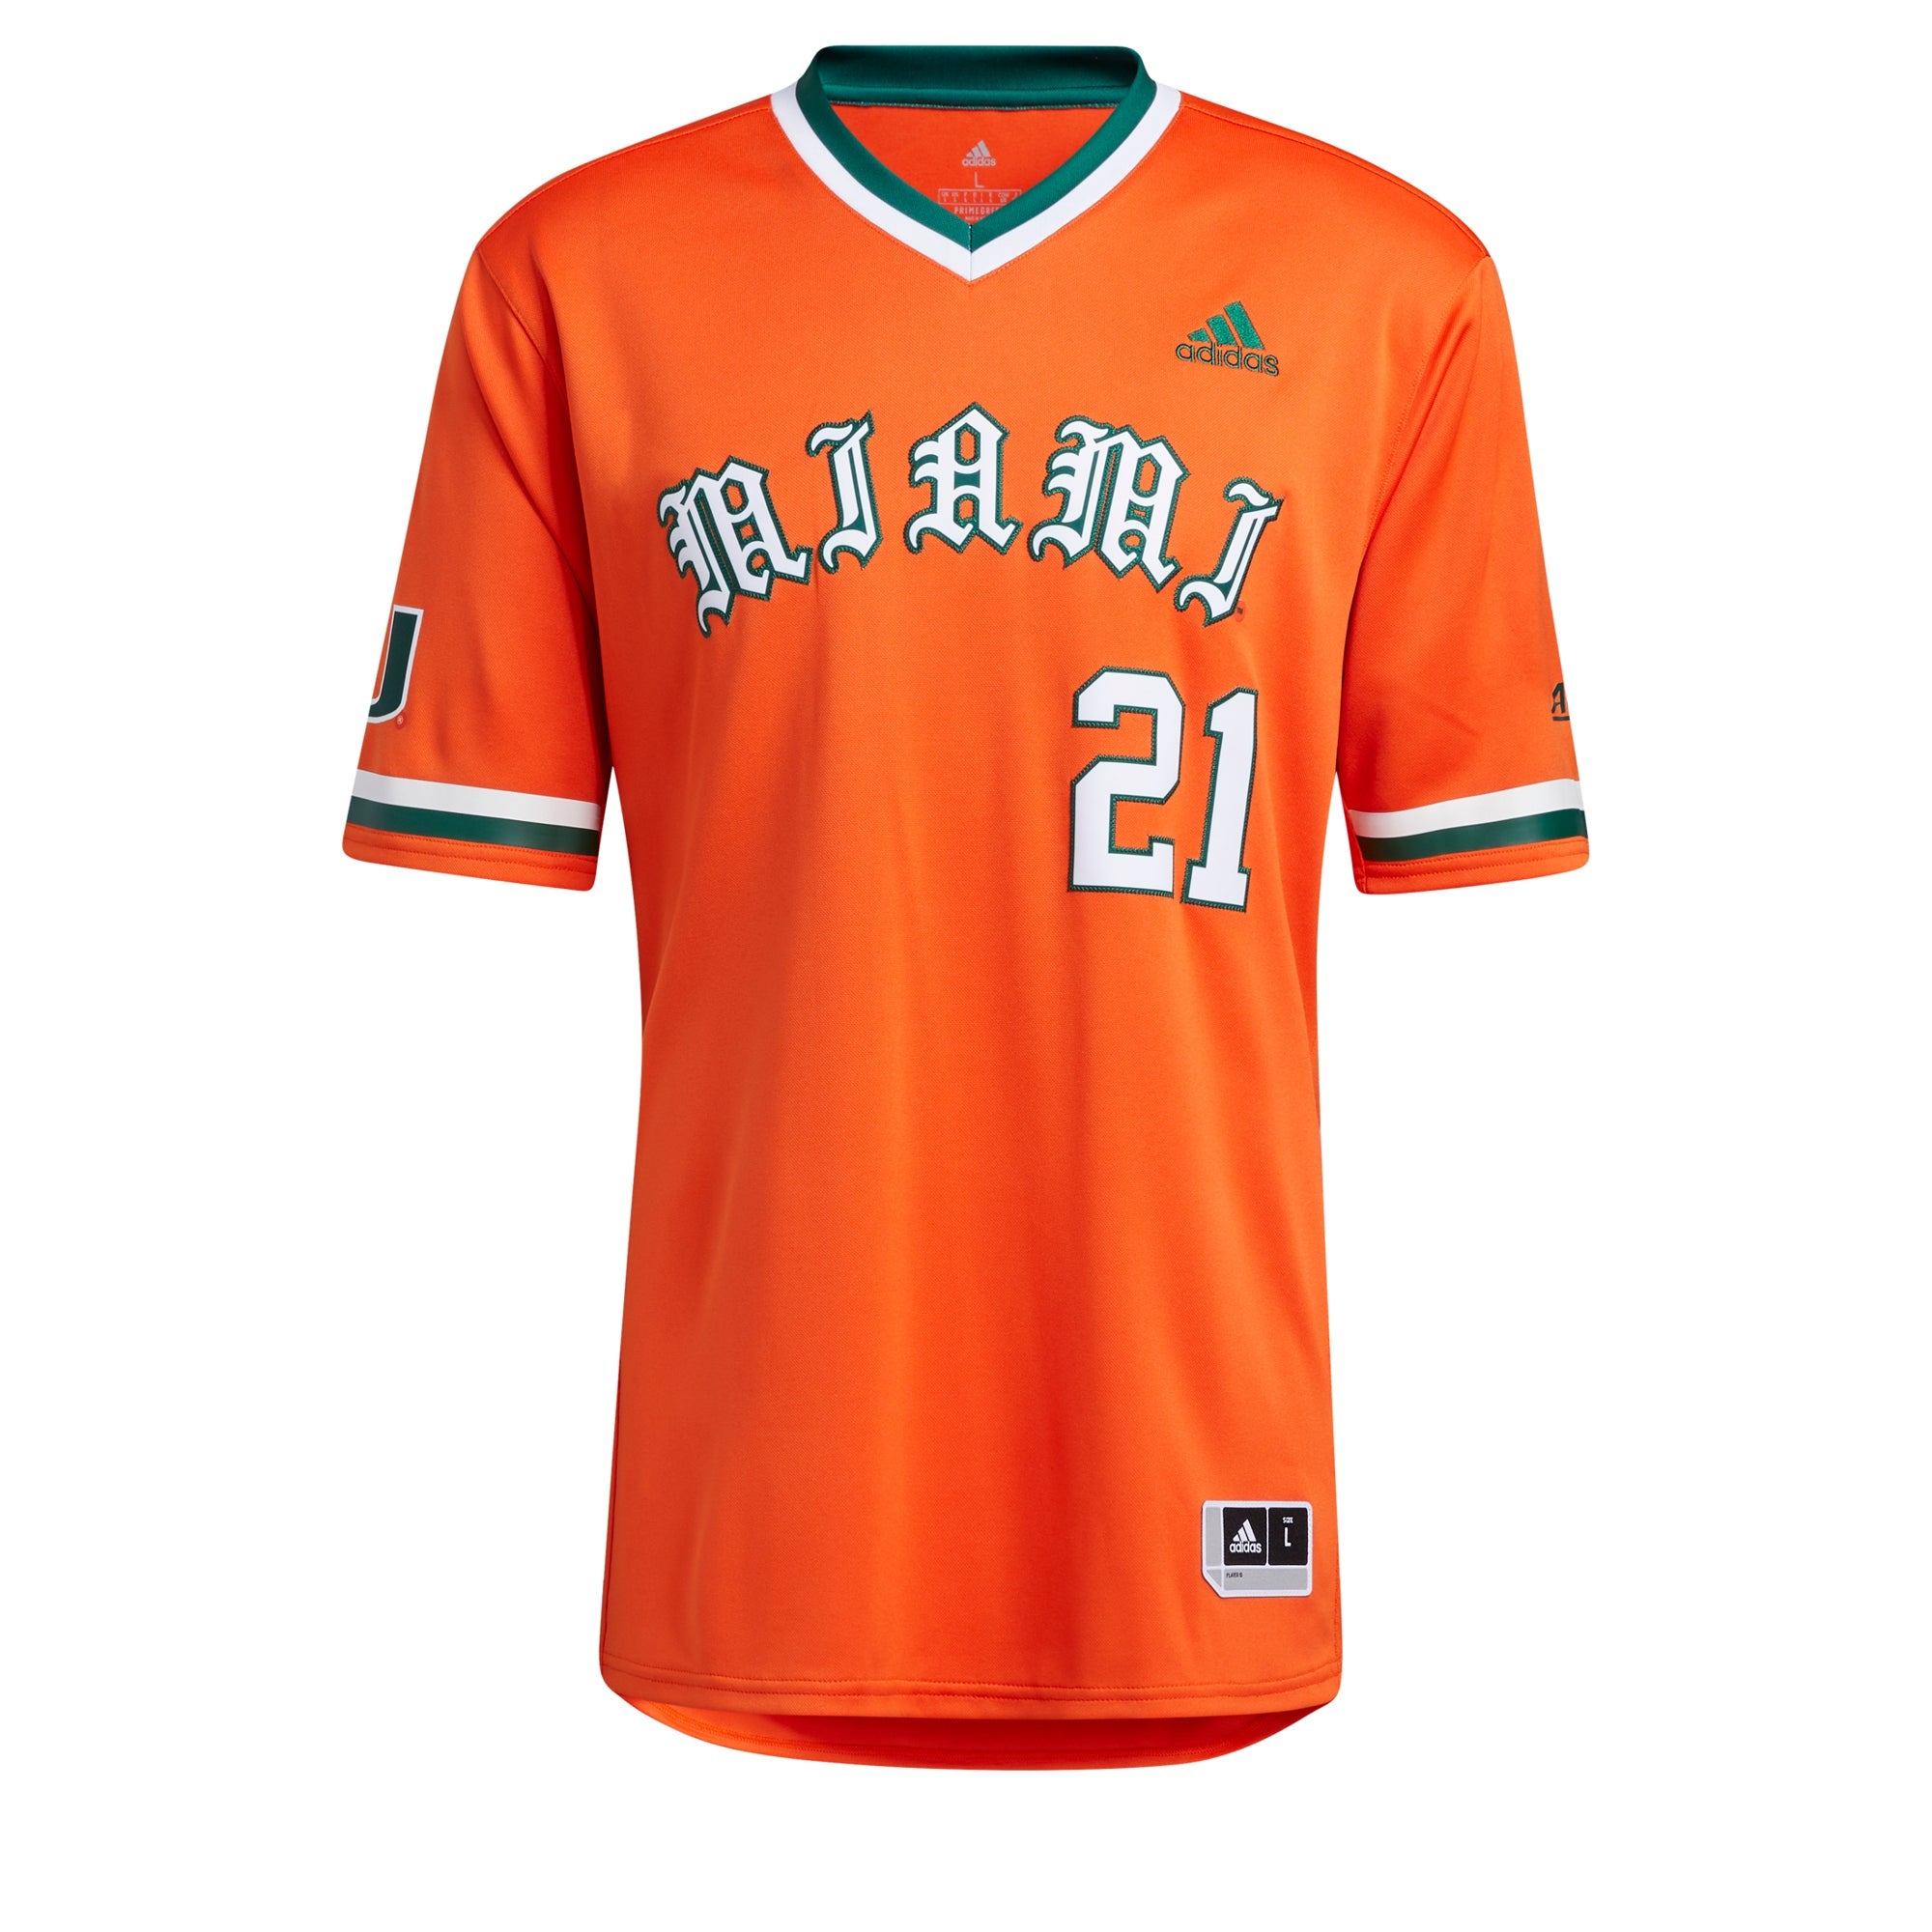 Miami Hurricanes Team-Issued adidas #14 White Baseball Jersey